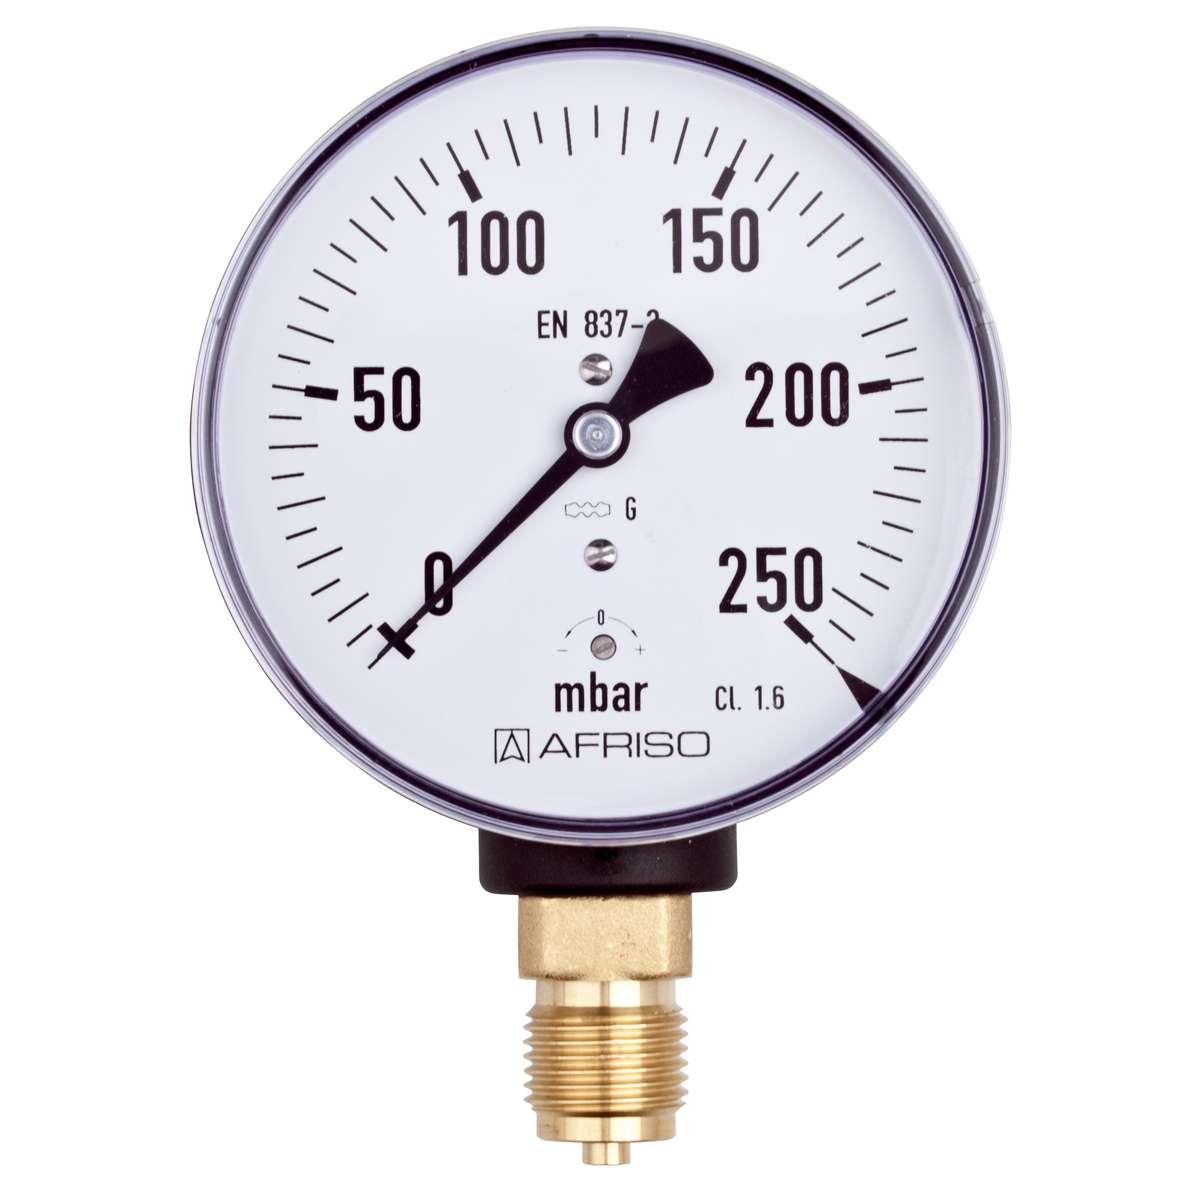 Manometr KP 100 pro plynná média, Ø 100 mm, 0 ÷ 100 mbar, G½", radiální, typ D2 - AFRISO.CZ